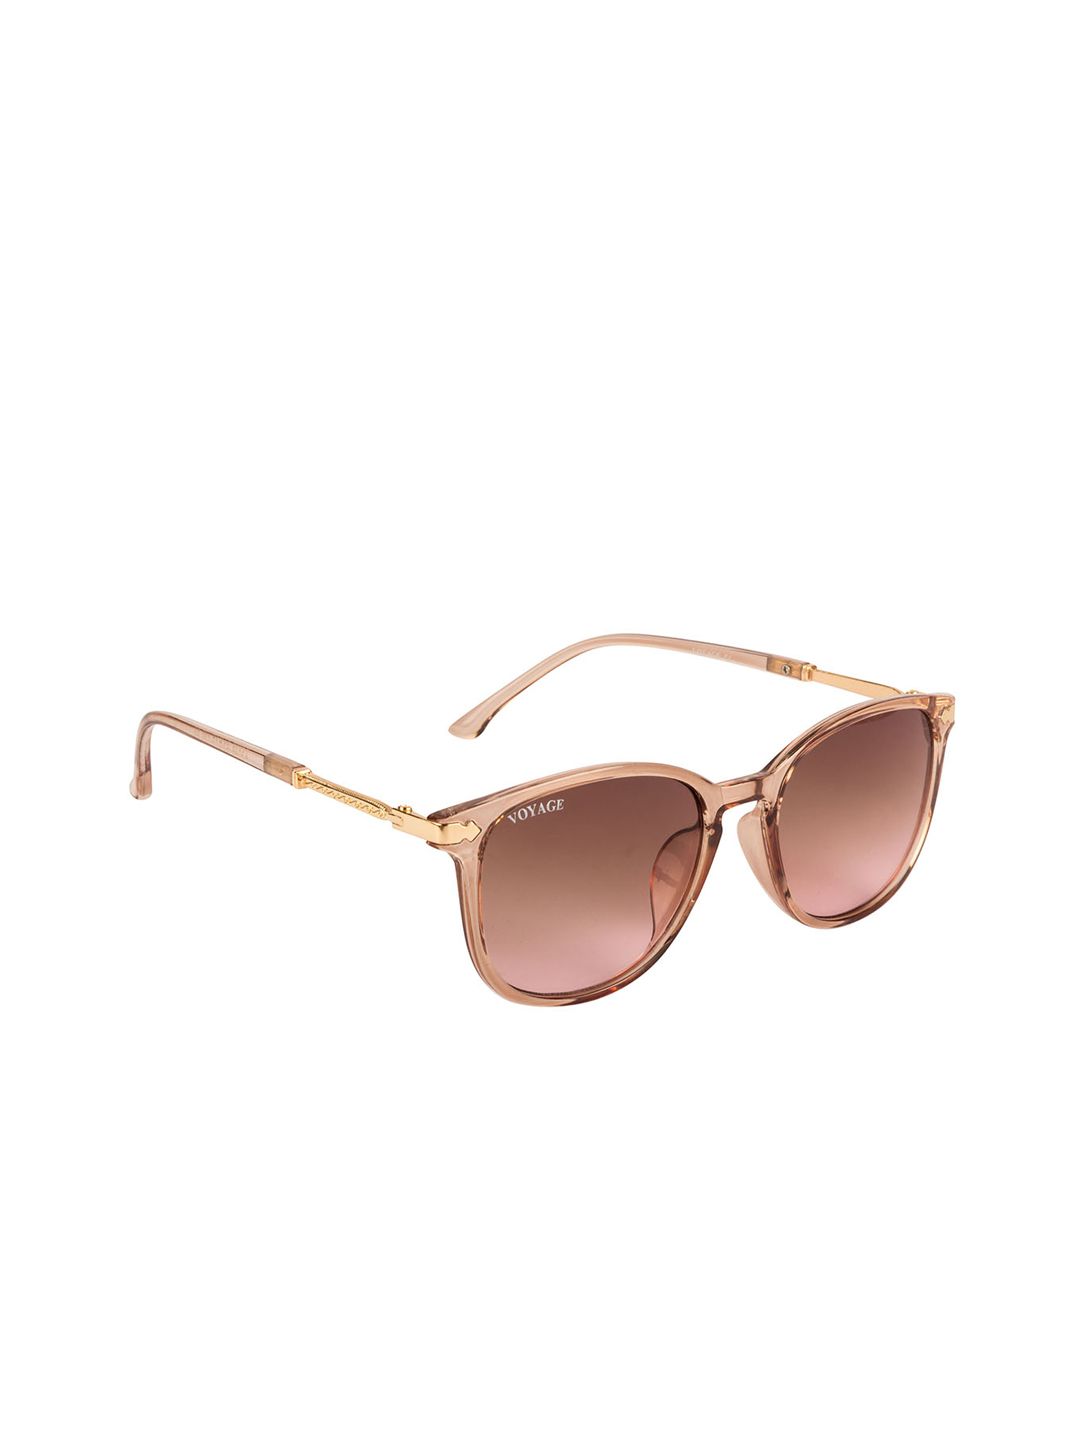 Voyage Women Wayfarer Sunglasses A3046MG3181 Price in India